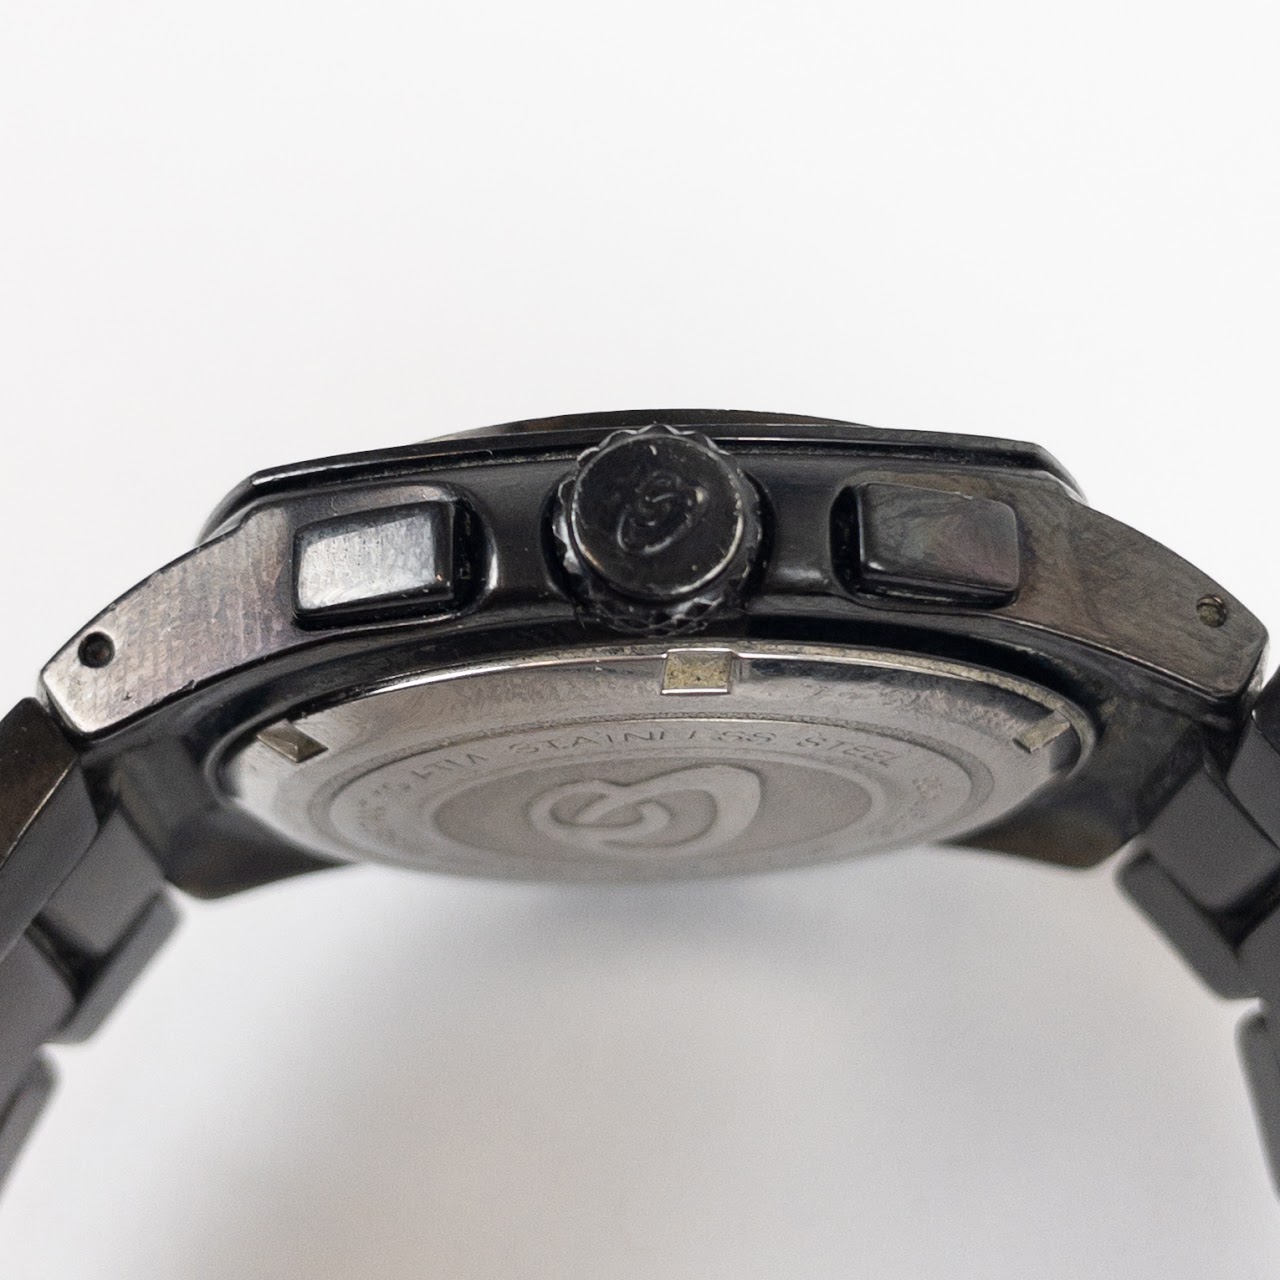 Breil Ducati Corse Chronograph Wristwatch